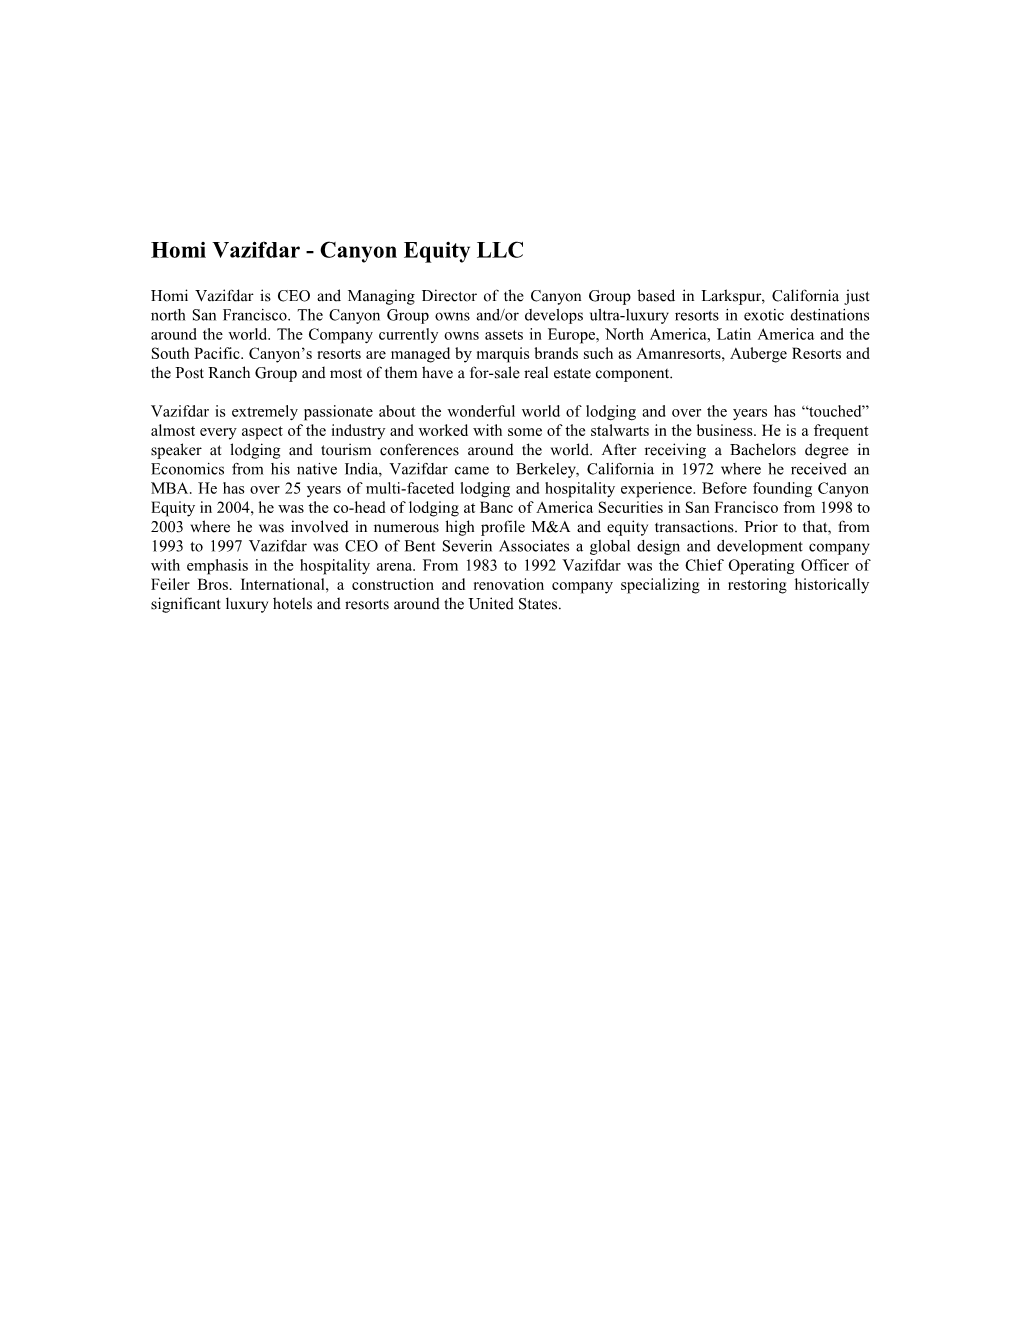 Homi Vazifdar - the Canyon Equity LLC